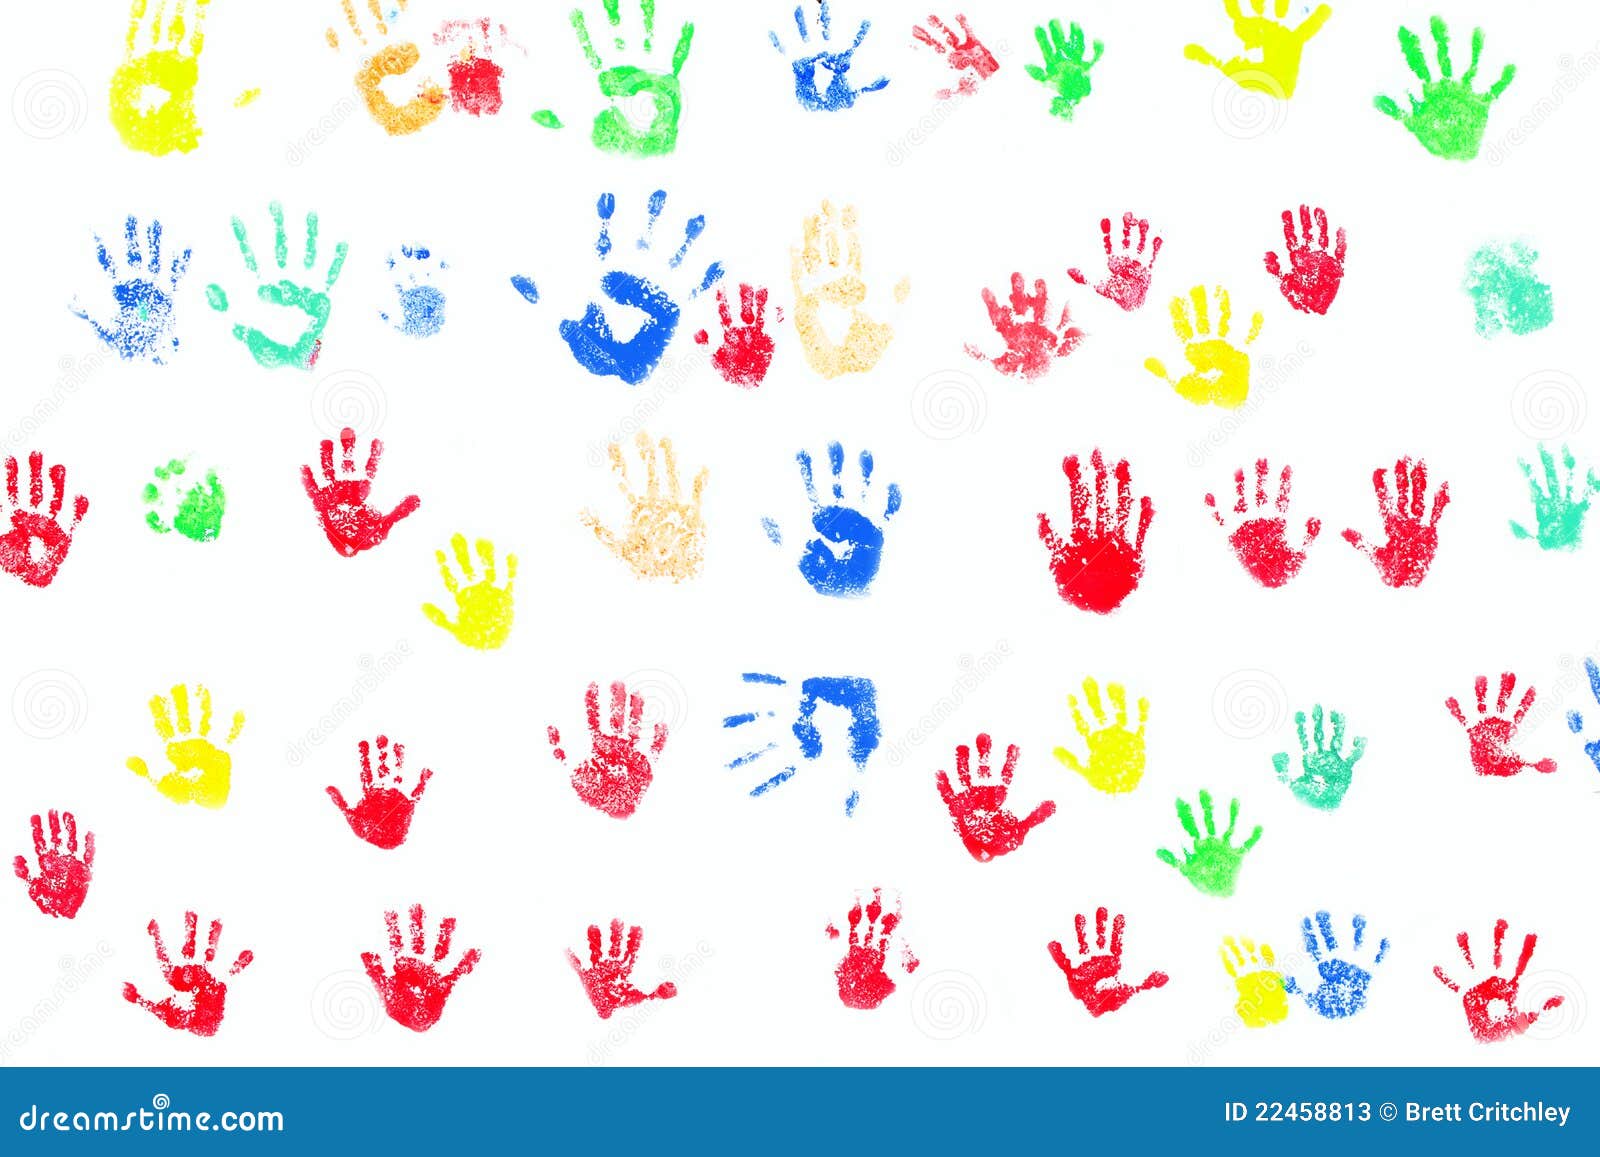 hand prints diversity